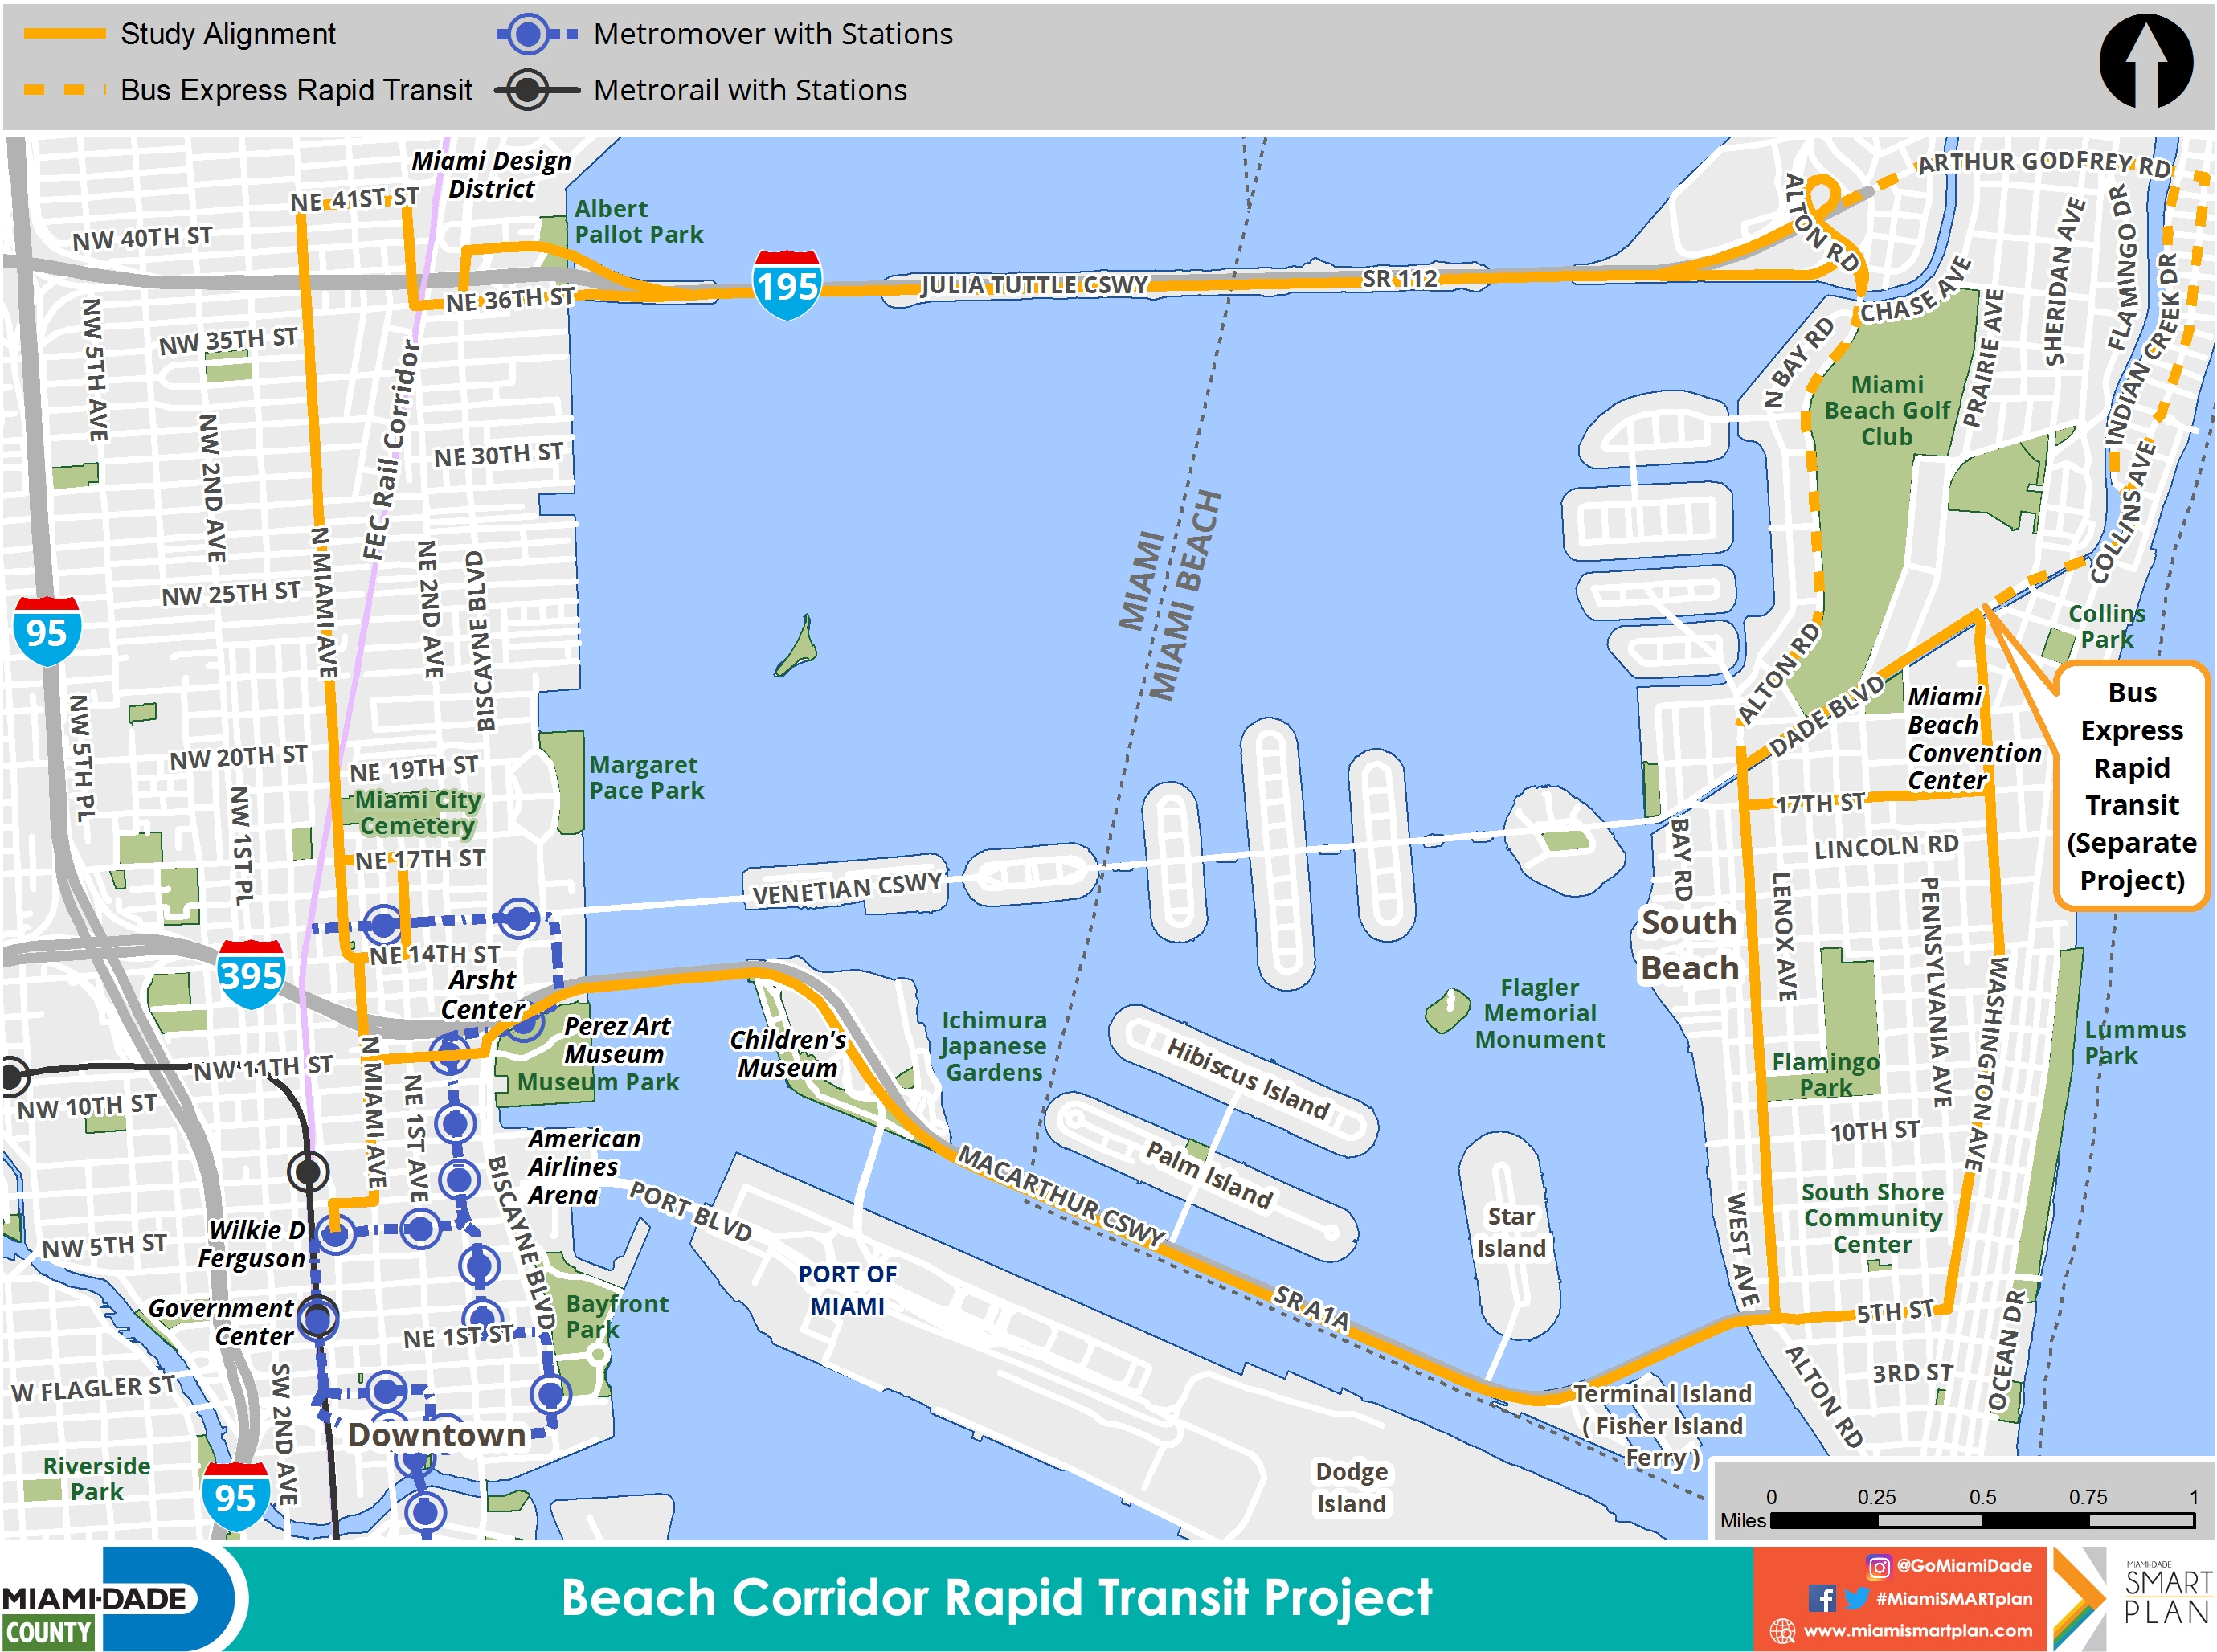 smart plan - beach corridor